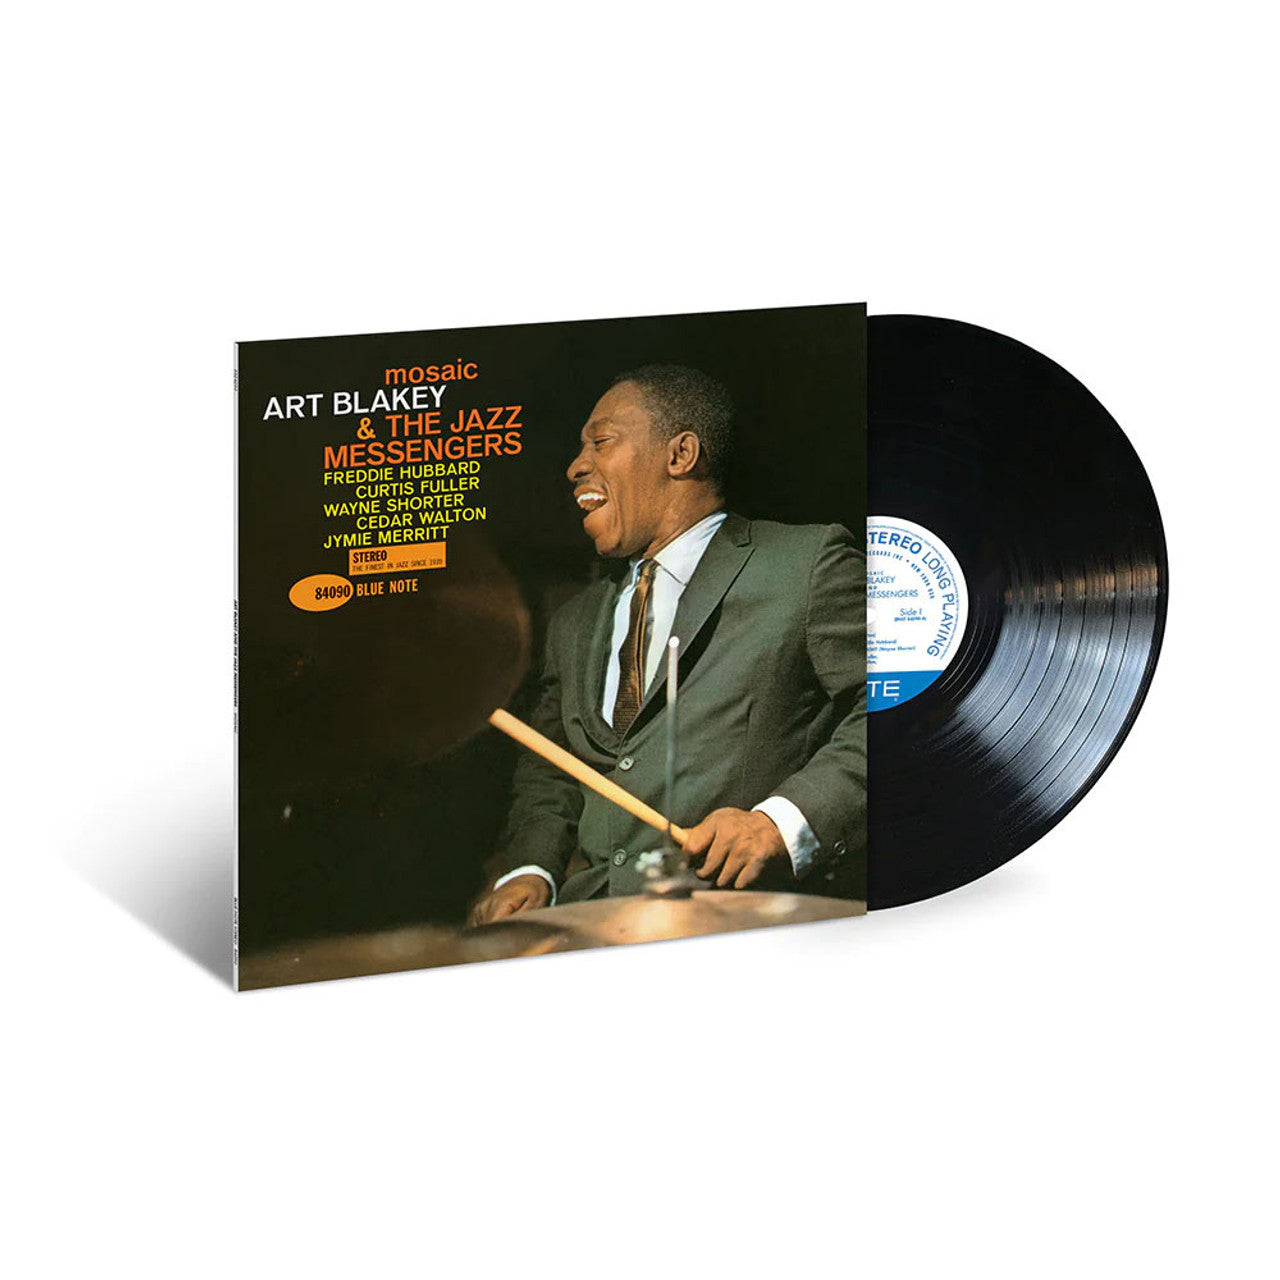 Art Blakey & the Jazz Messengers - Mosaic - Blue Note Classic - LP